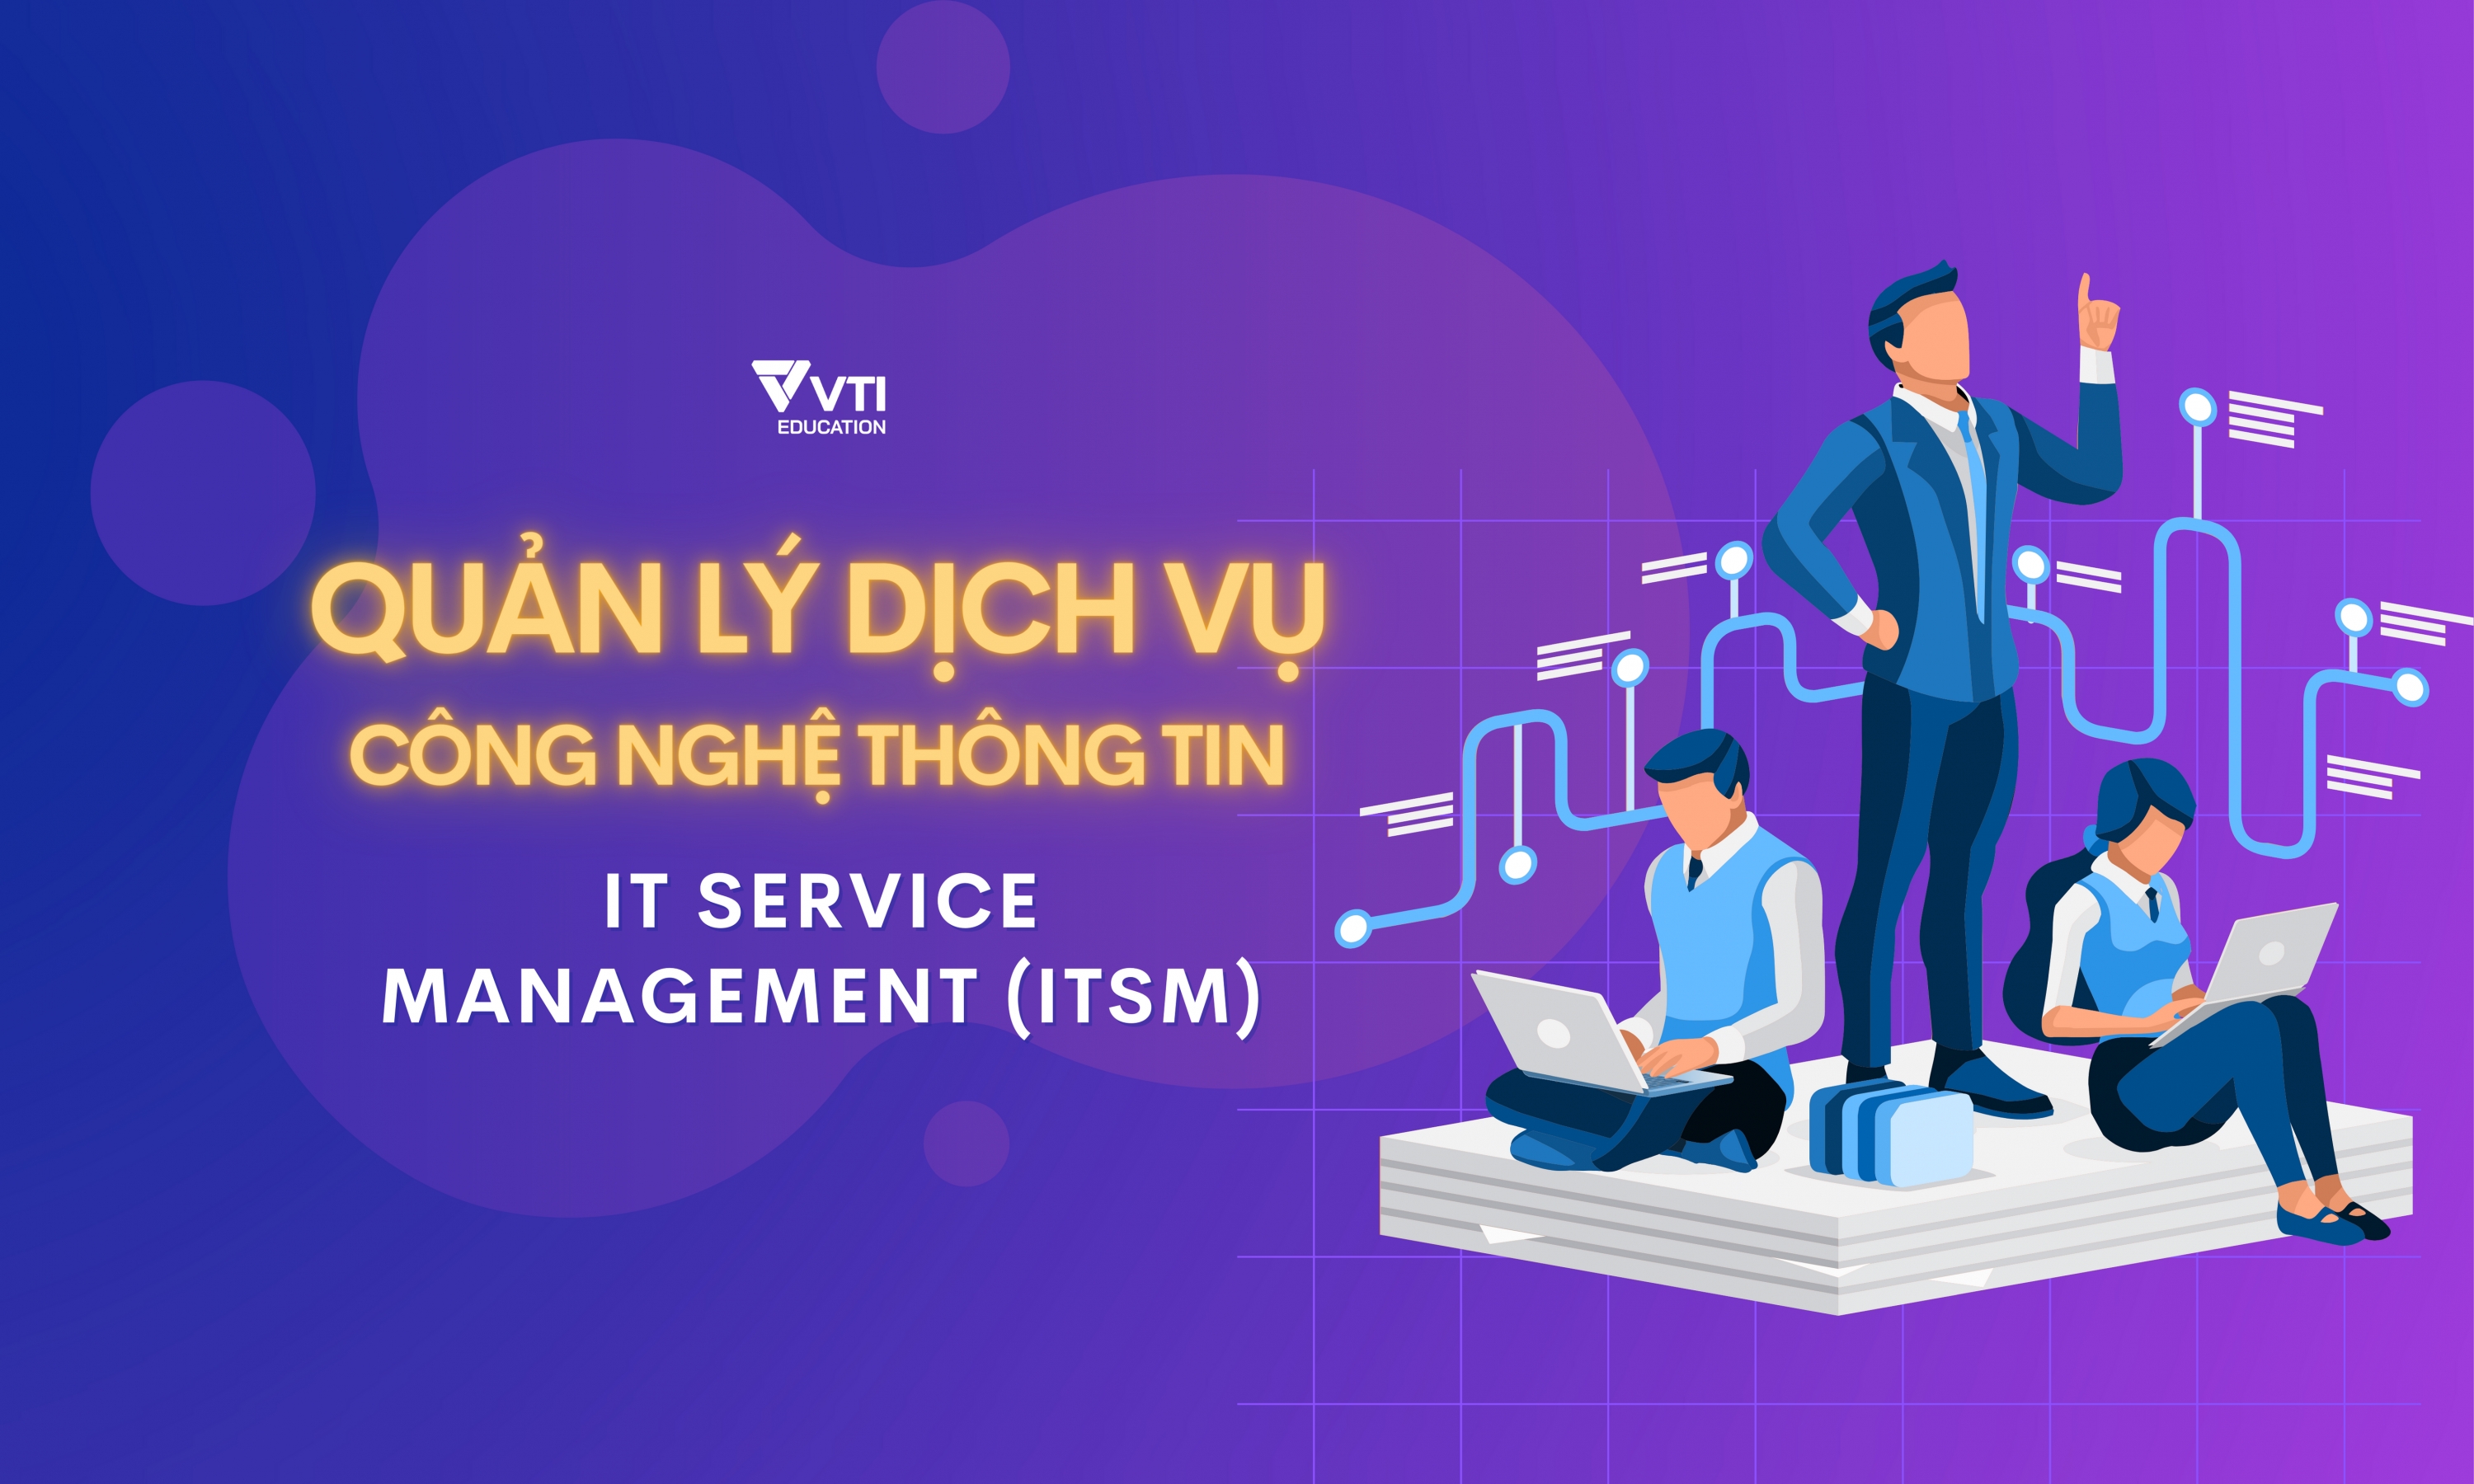 Quản lý dịch vụ CNTT - IT Service Management (ITSM)